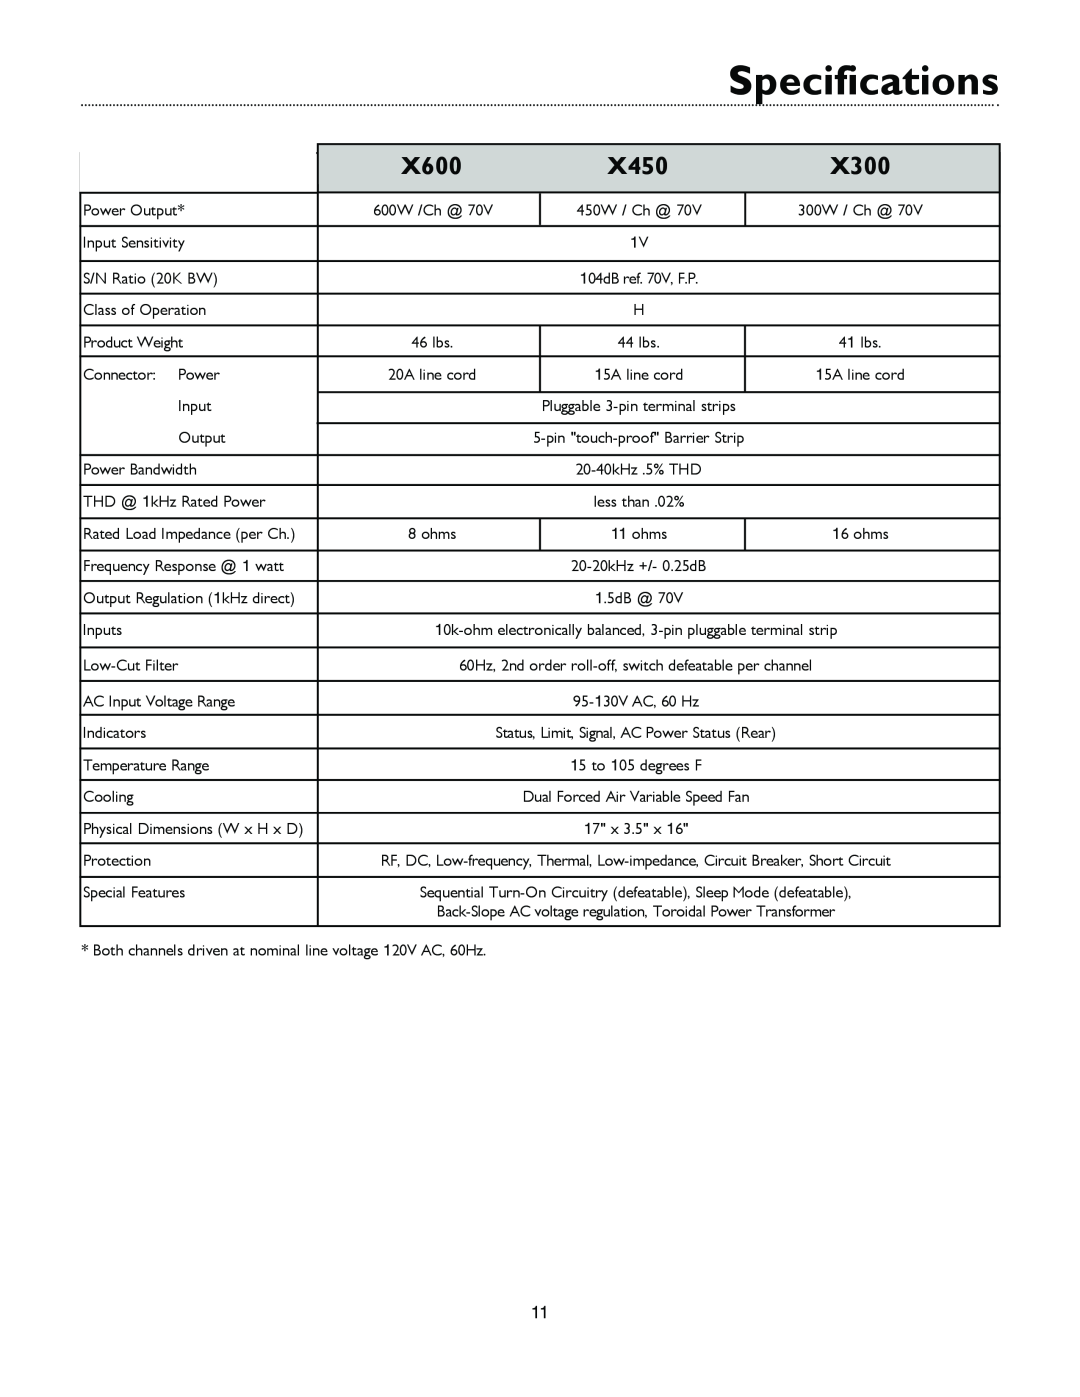 Bogen X300 manual Specifications, X600, X450 